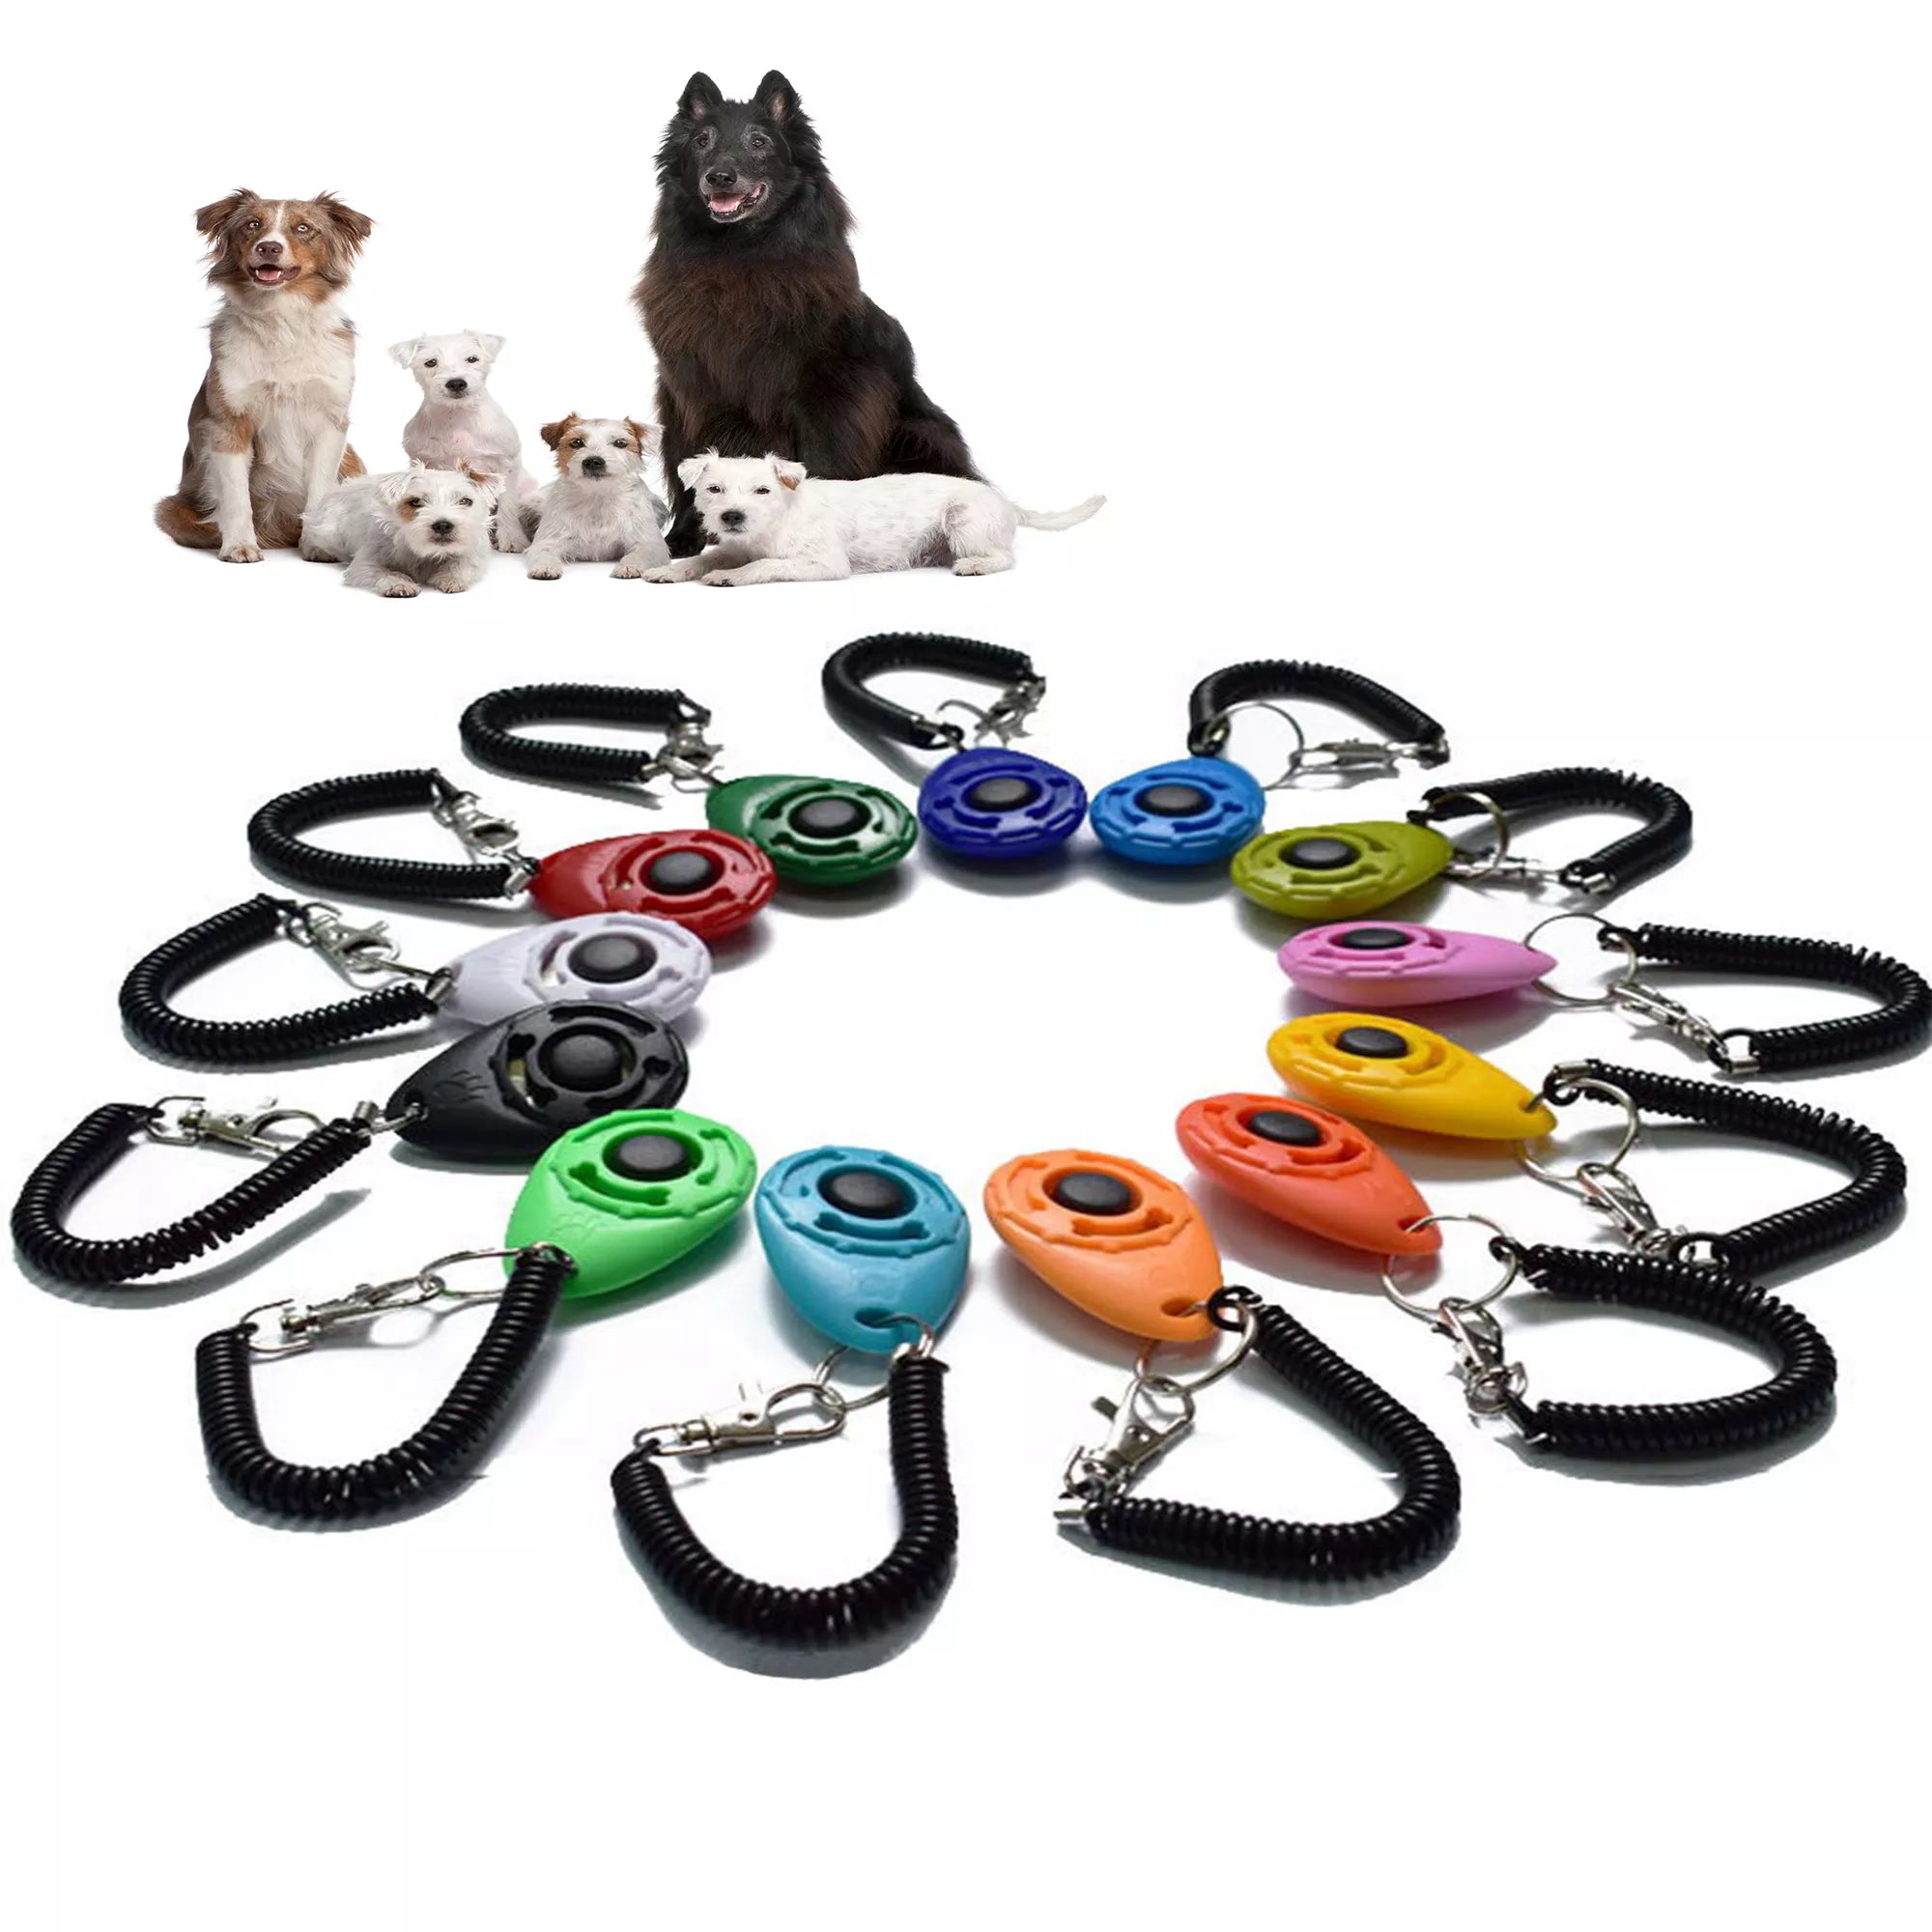 Dog Clicker Training Tool: Effective Pet Trainer Aid with Adjustable Wrist Strap  petlums.com   